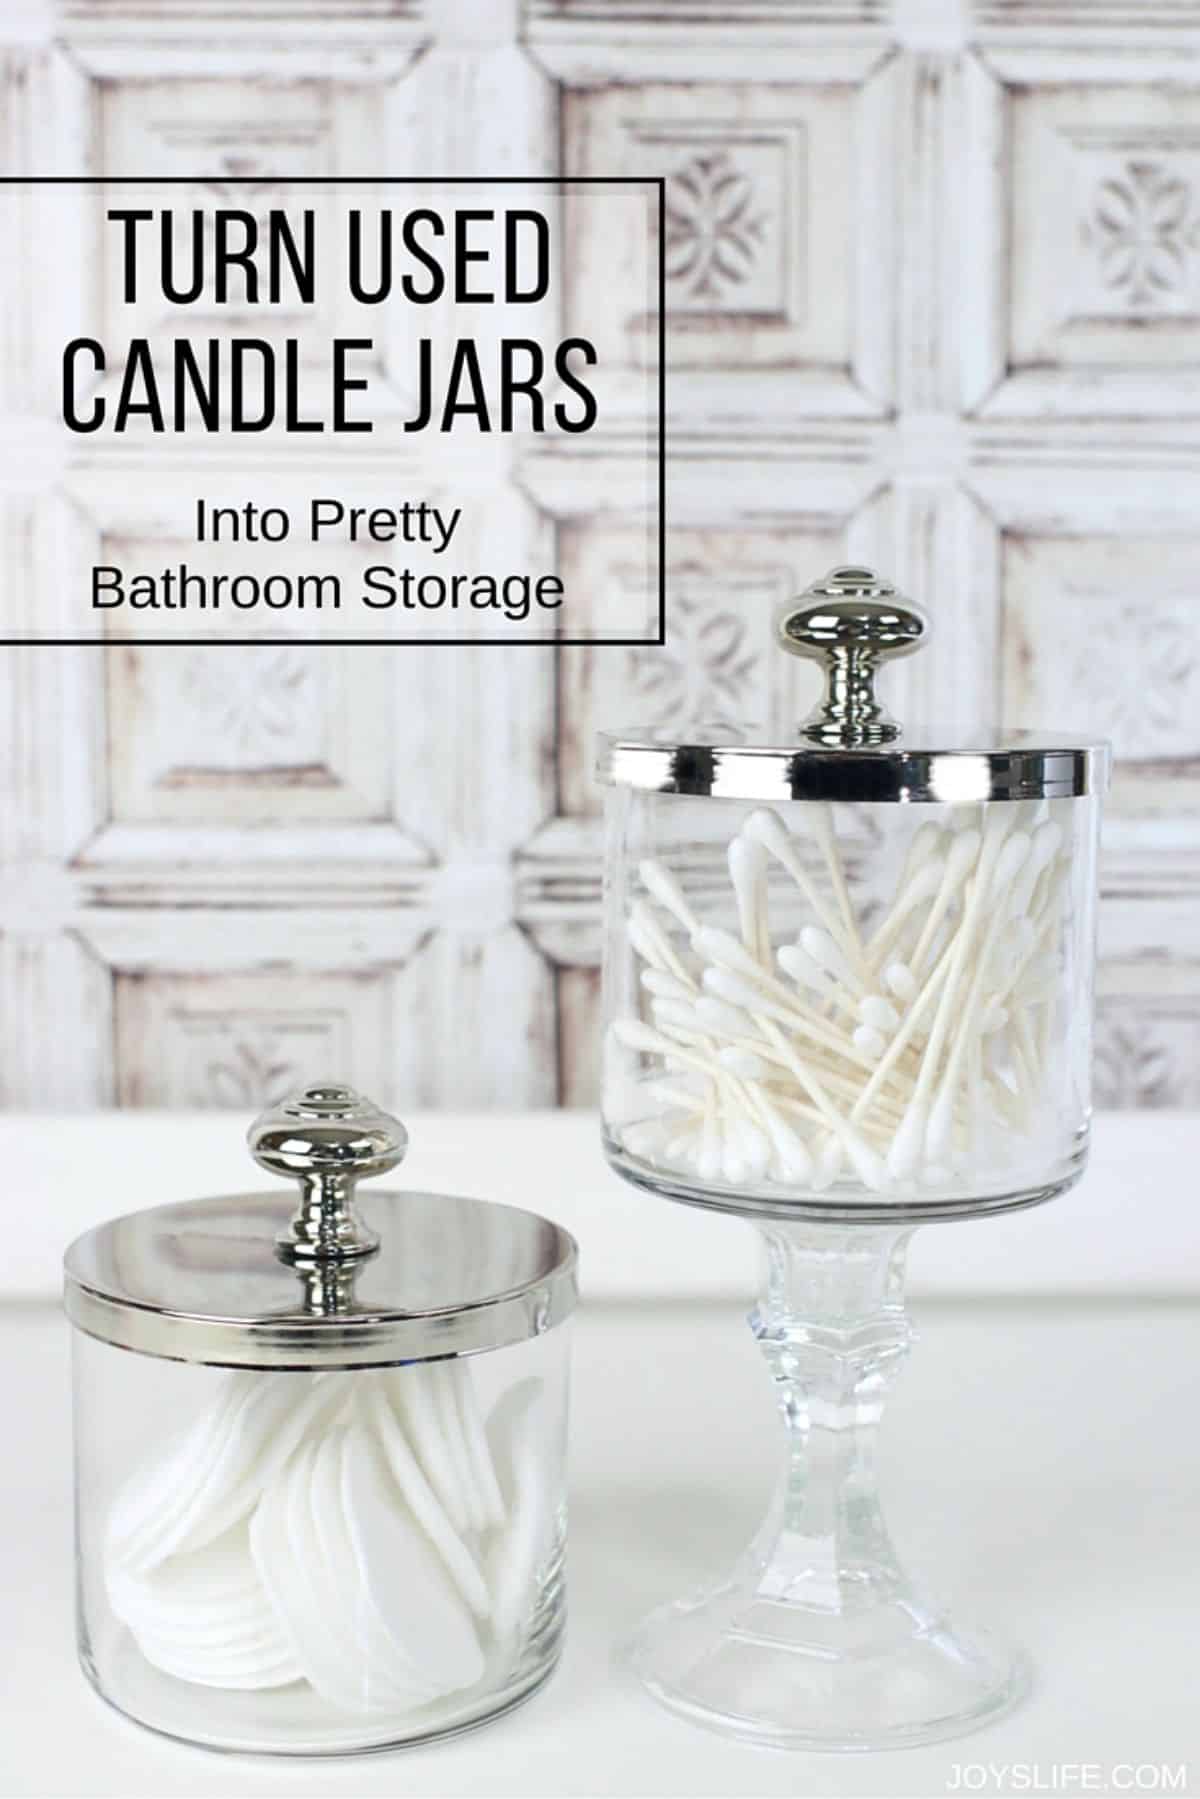 Two candle jars uses as bathroom storage.